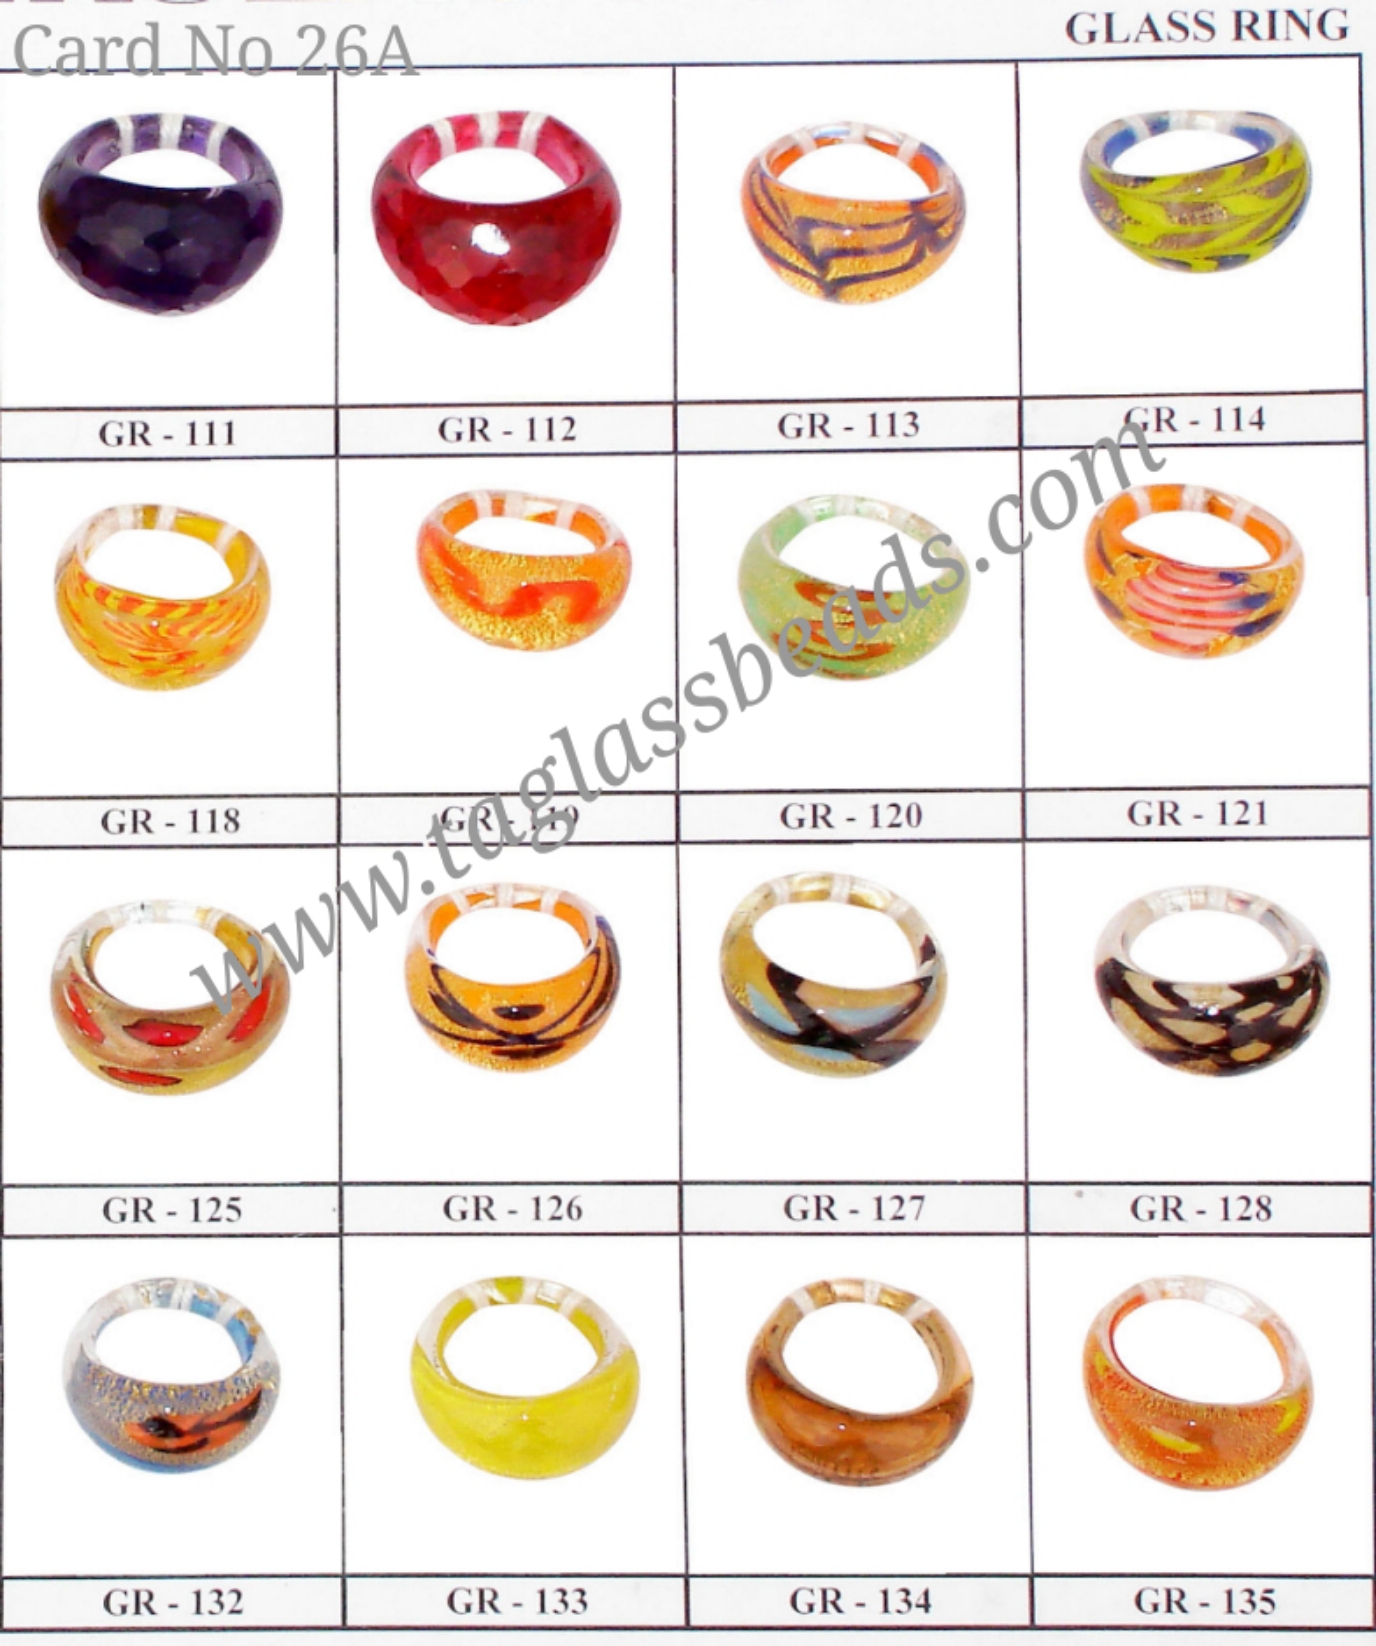 Glass Rings